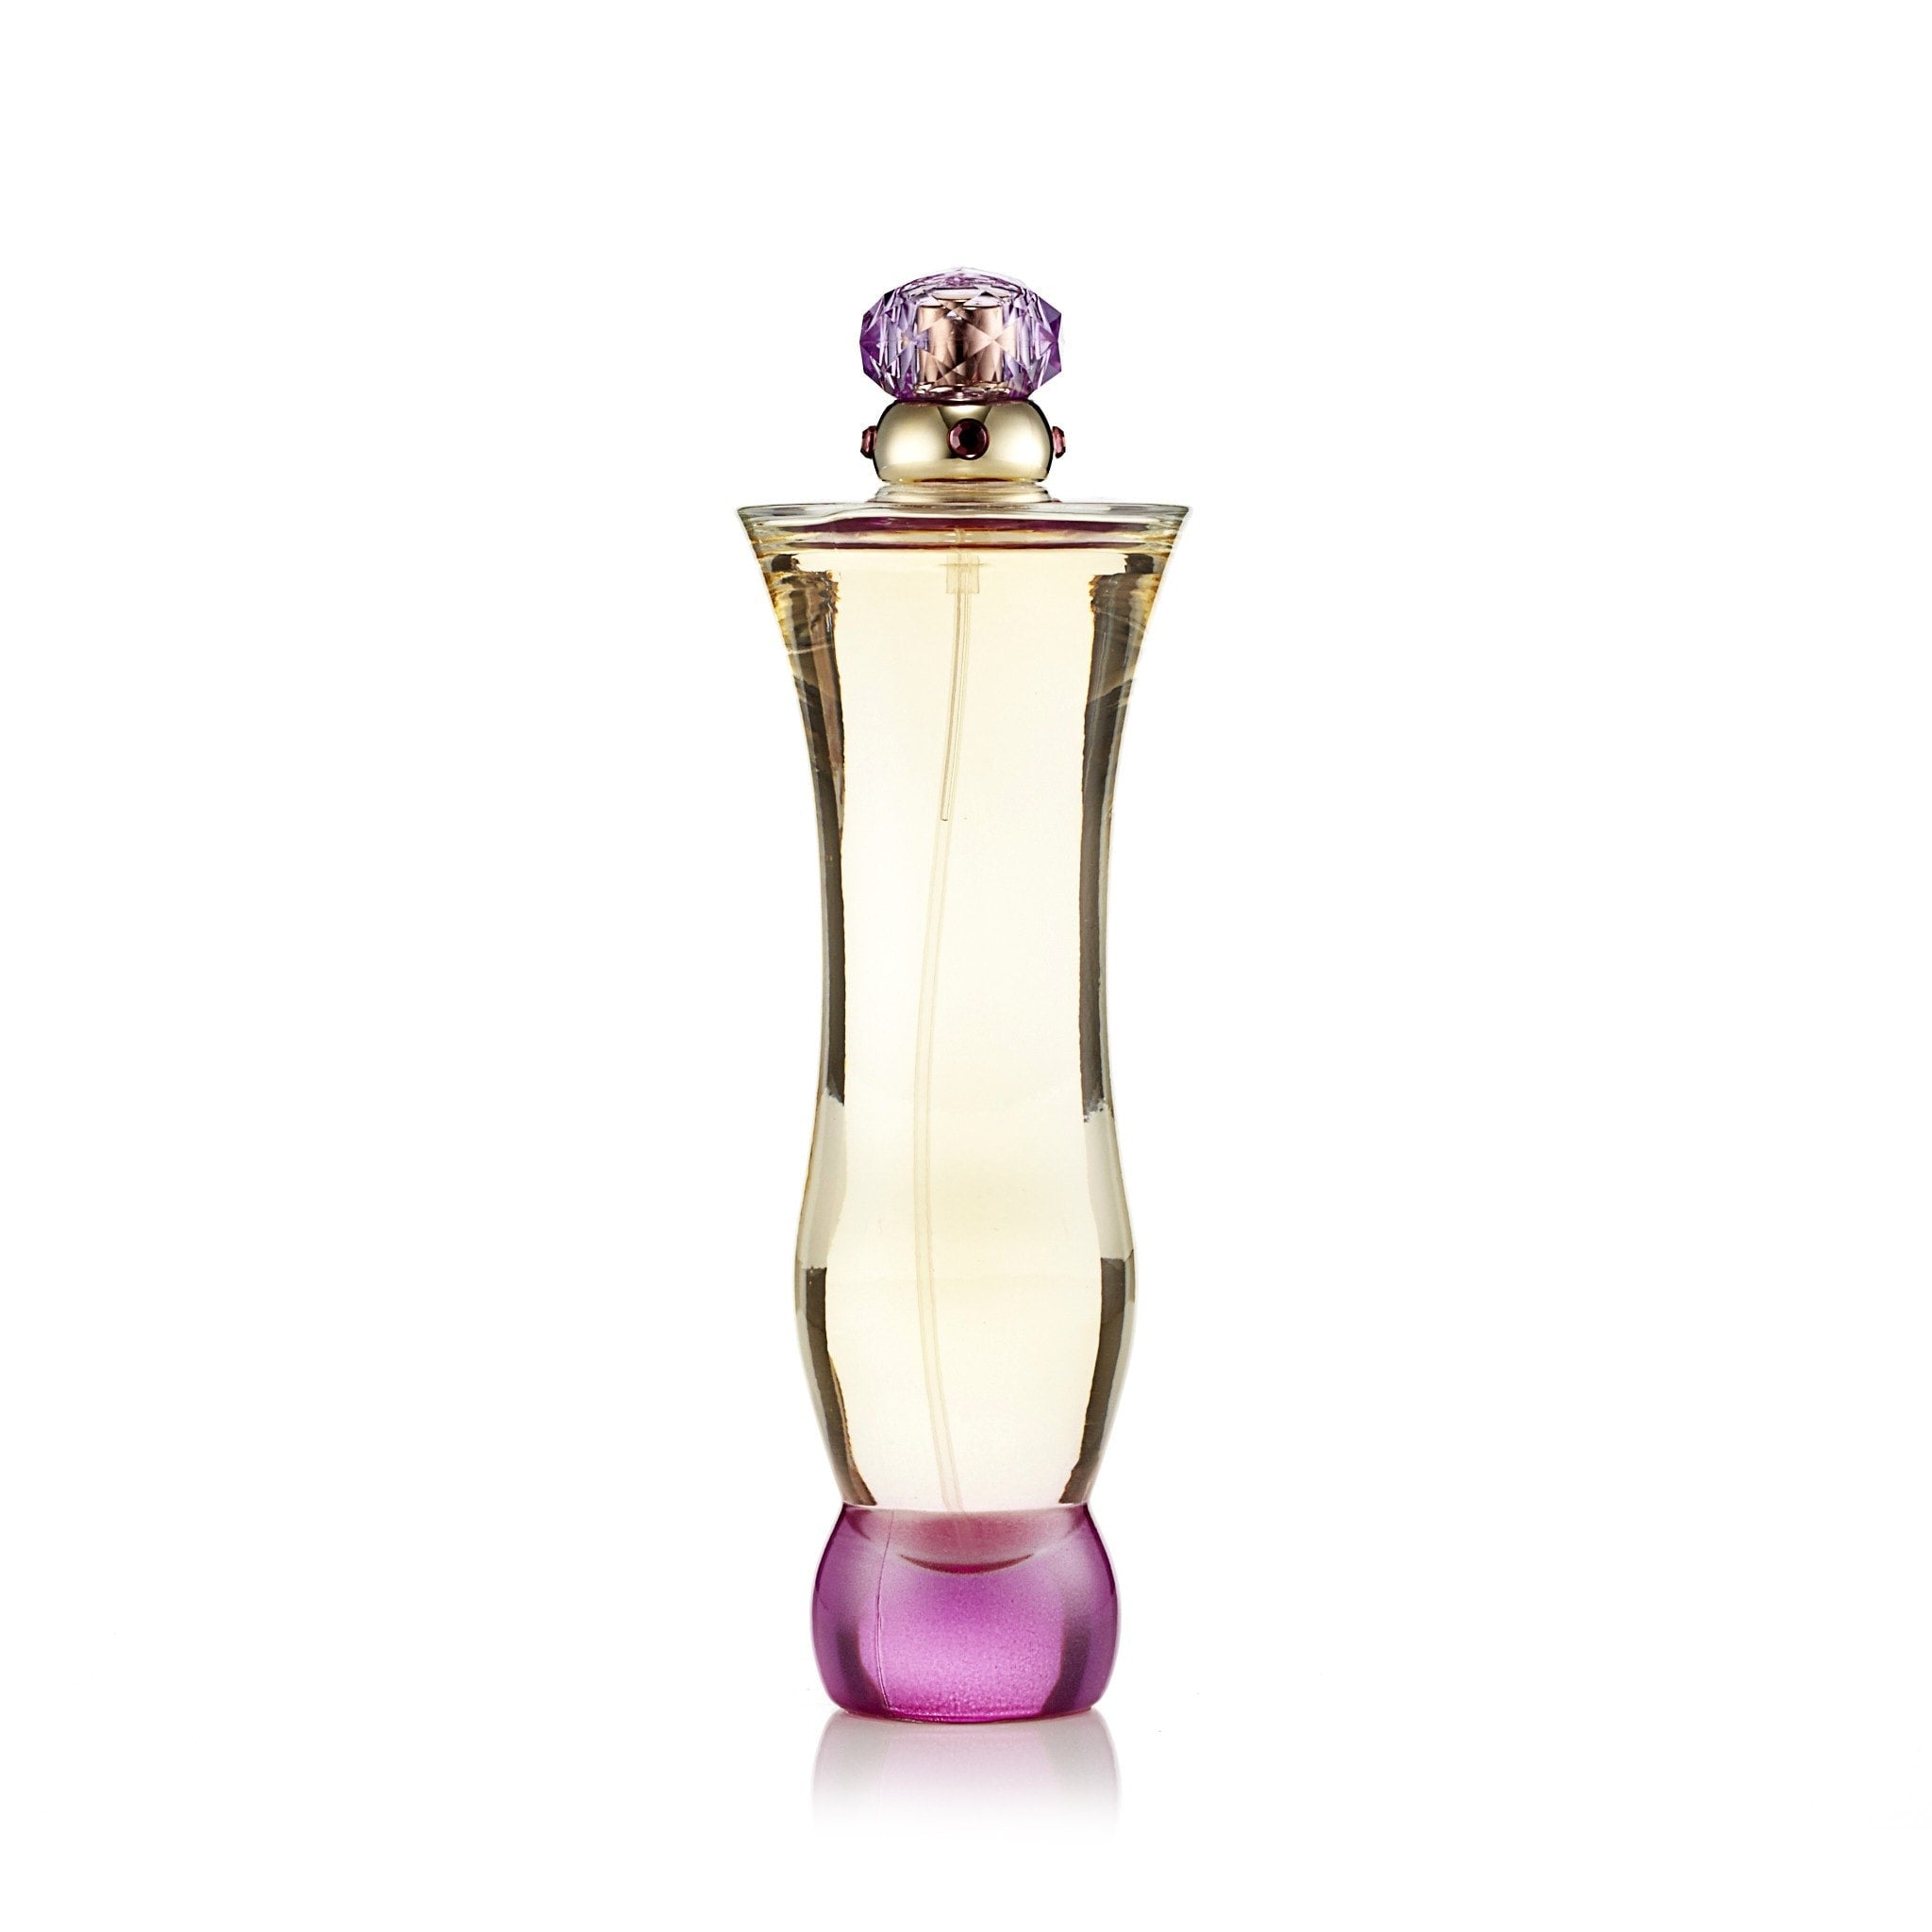 Versace Woman Eau de Parfum Spray for Women by Versace Featured image